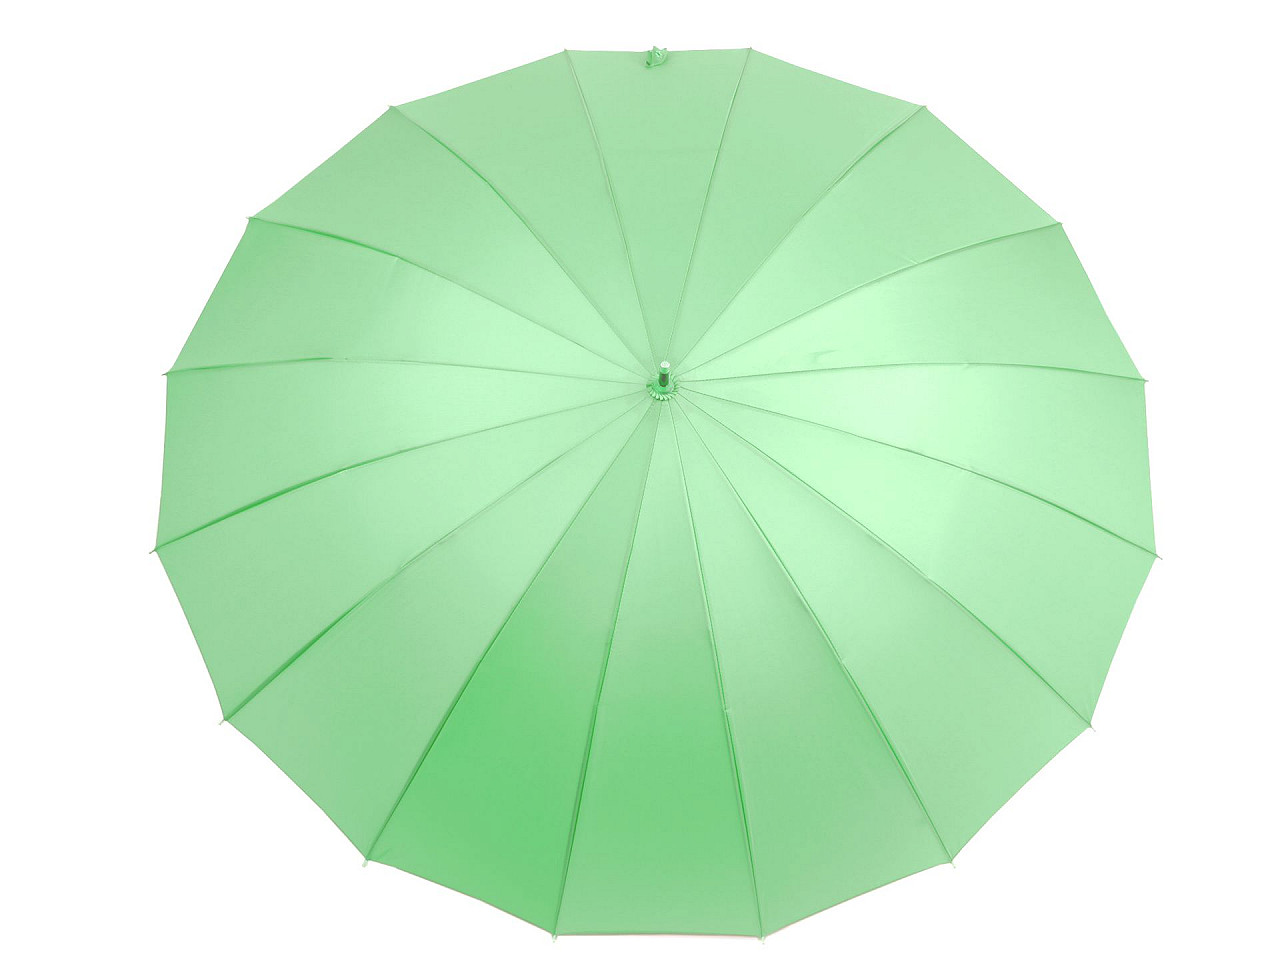 Damen-Automatik-Regenschirm, grün past.sv., 1 Stk